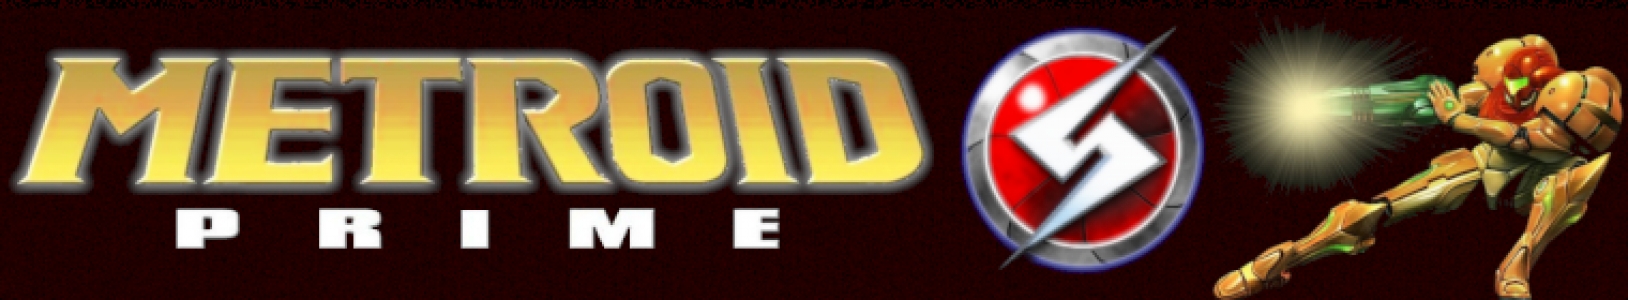 Metroid Prime banner